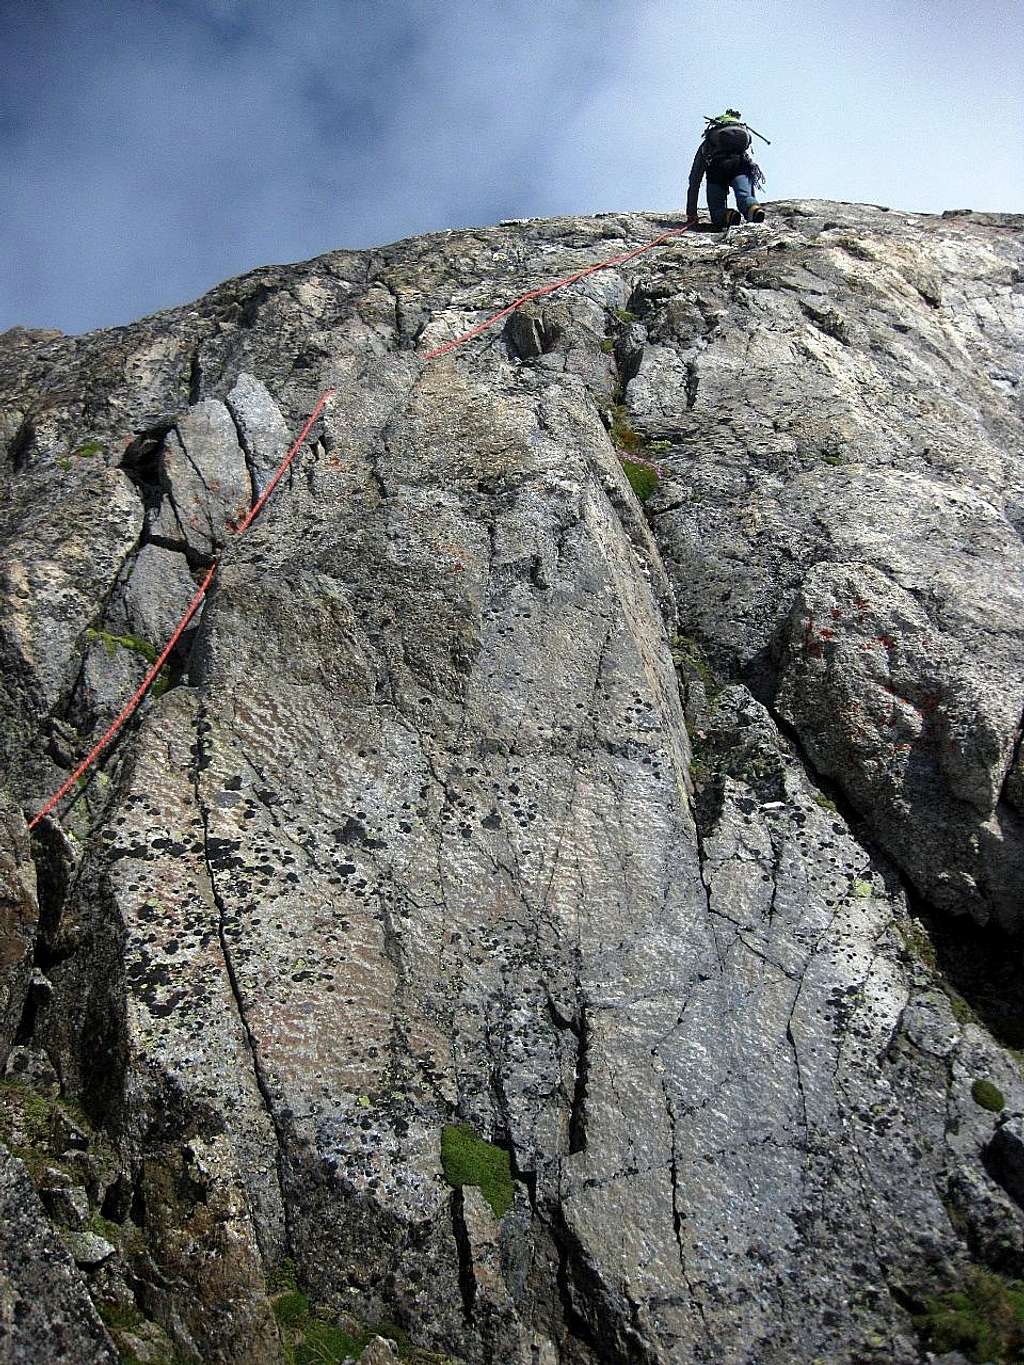 Hermann leading on the Wilde Leck east ridge